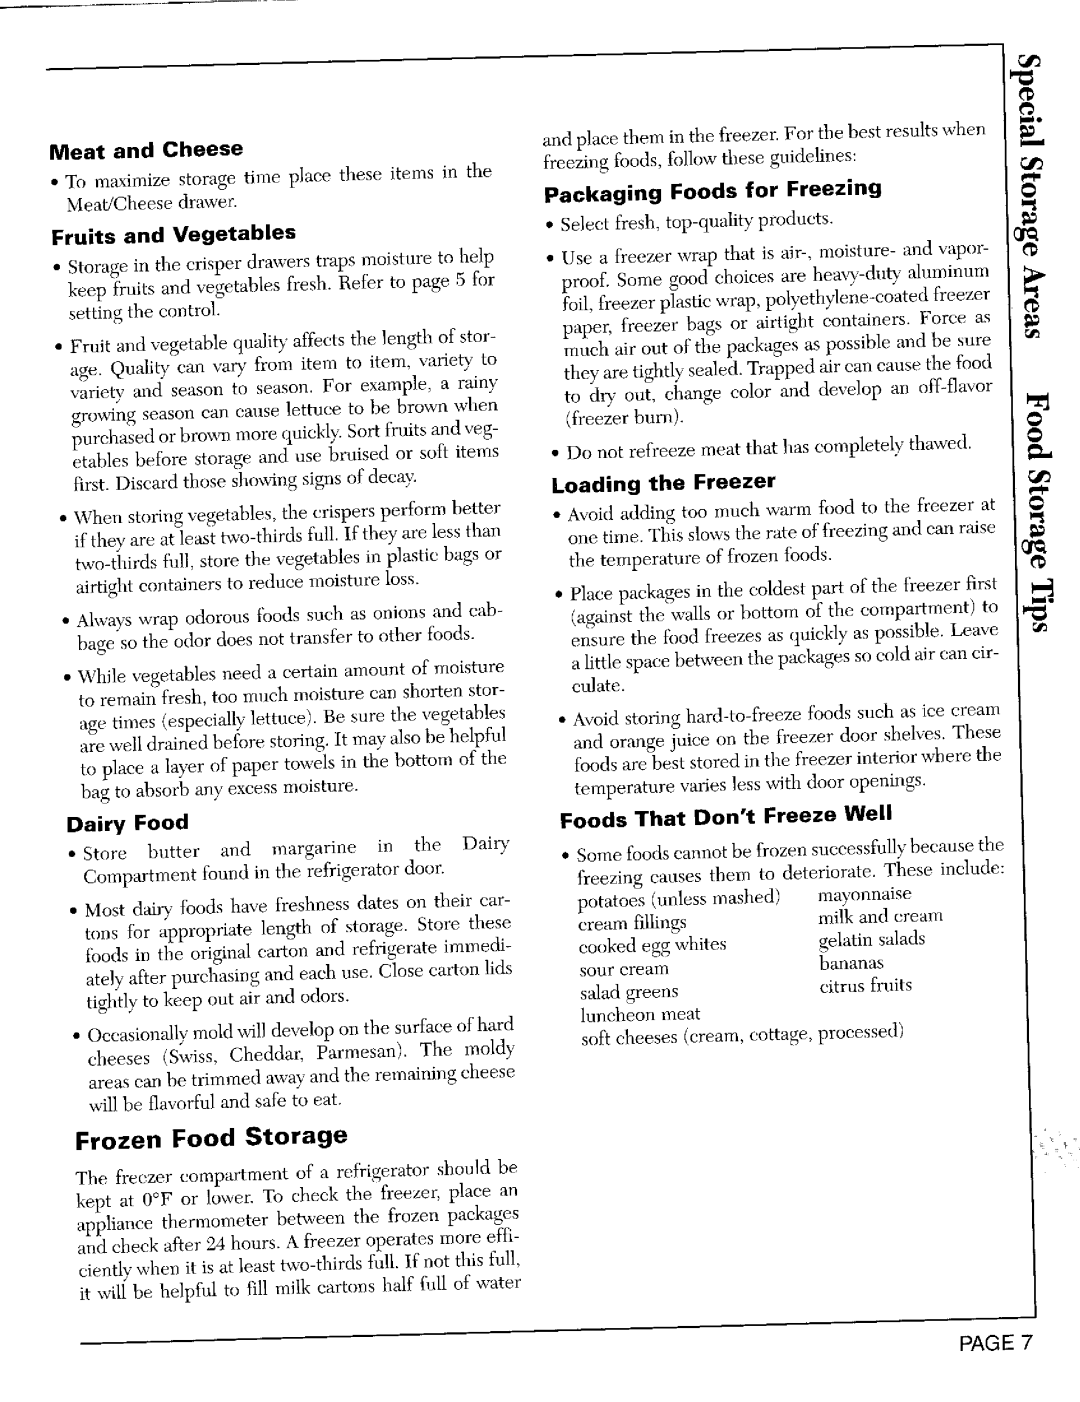 Maytag RSW2700, RSW2400, RSW2200 warranty Frozen Food Storage, freezing foods, follow these guidelines 